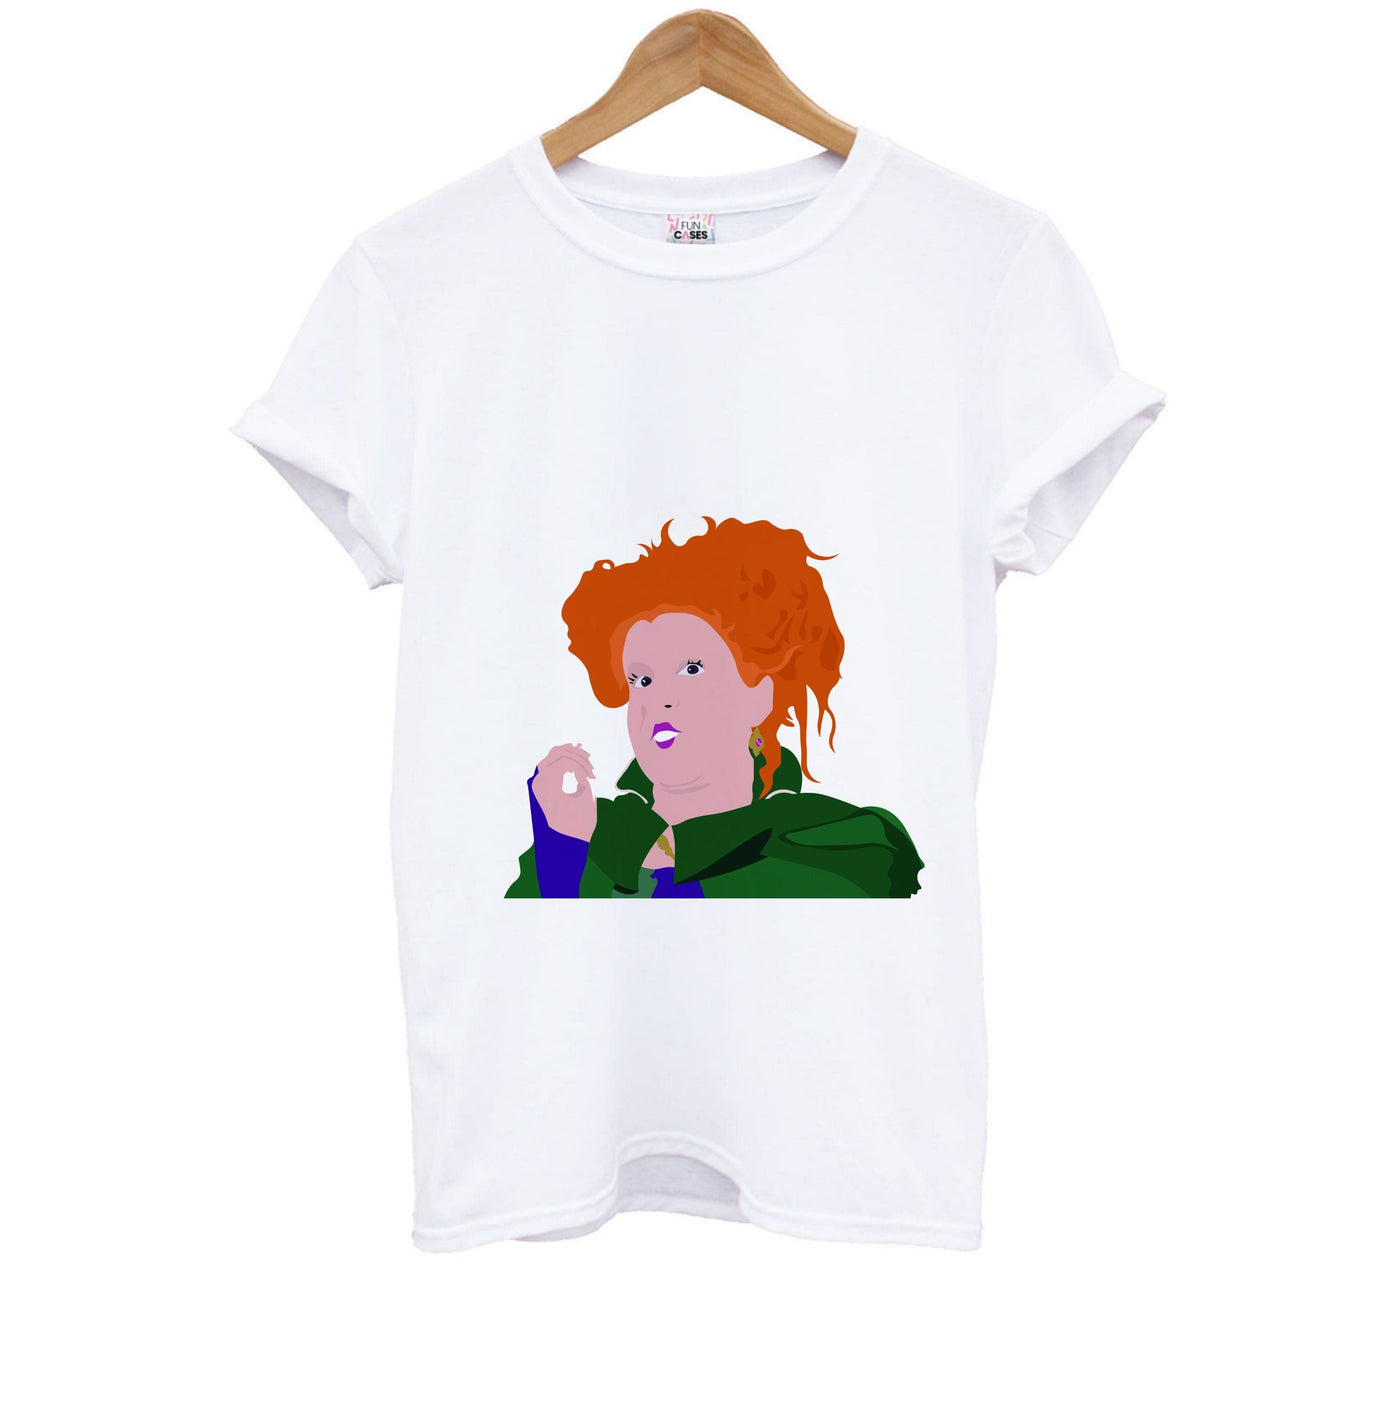 Winifred Sanderson - Hocus Pocus Kids T-Shirt